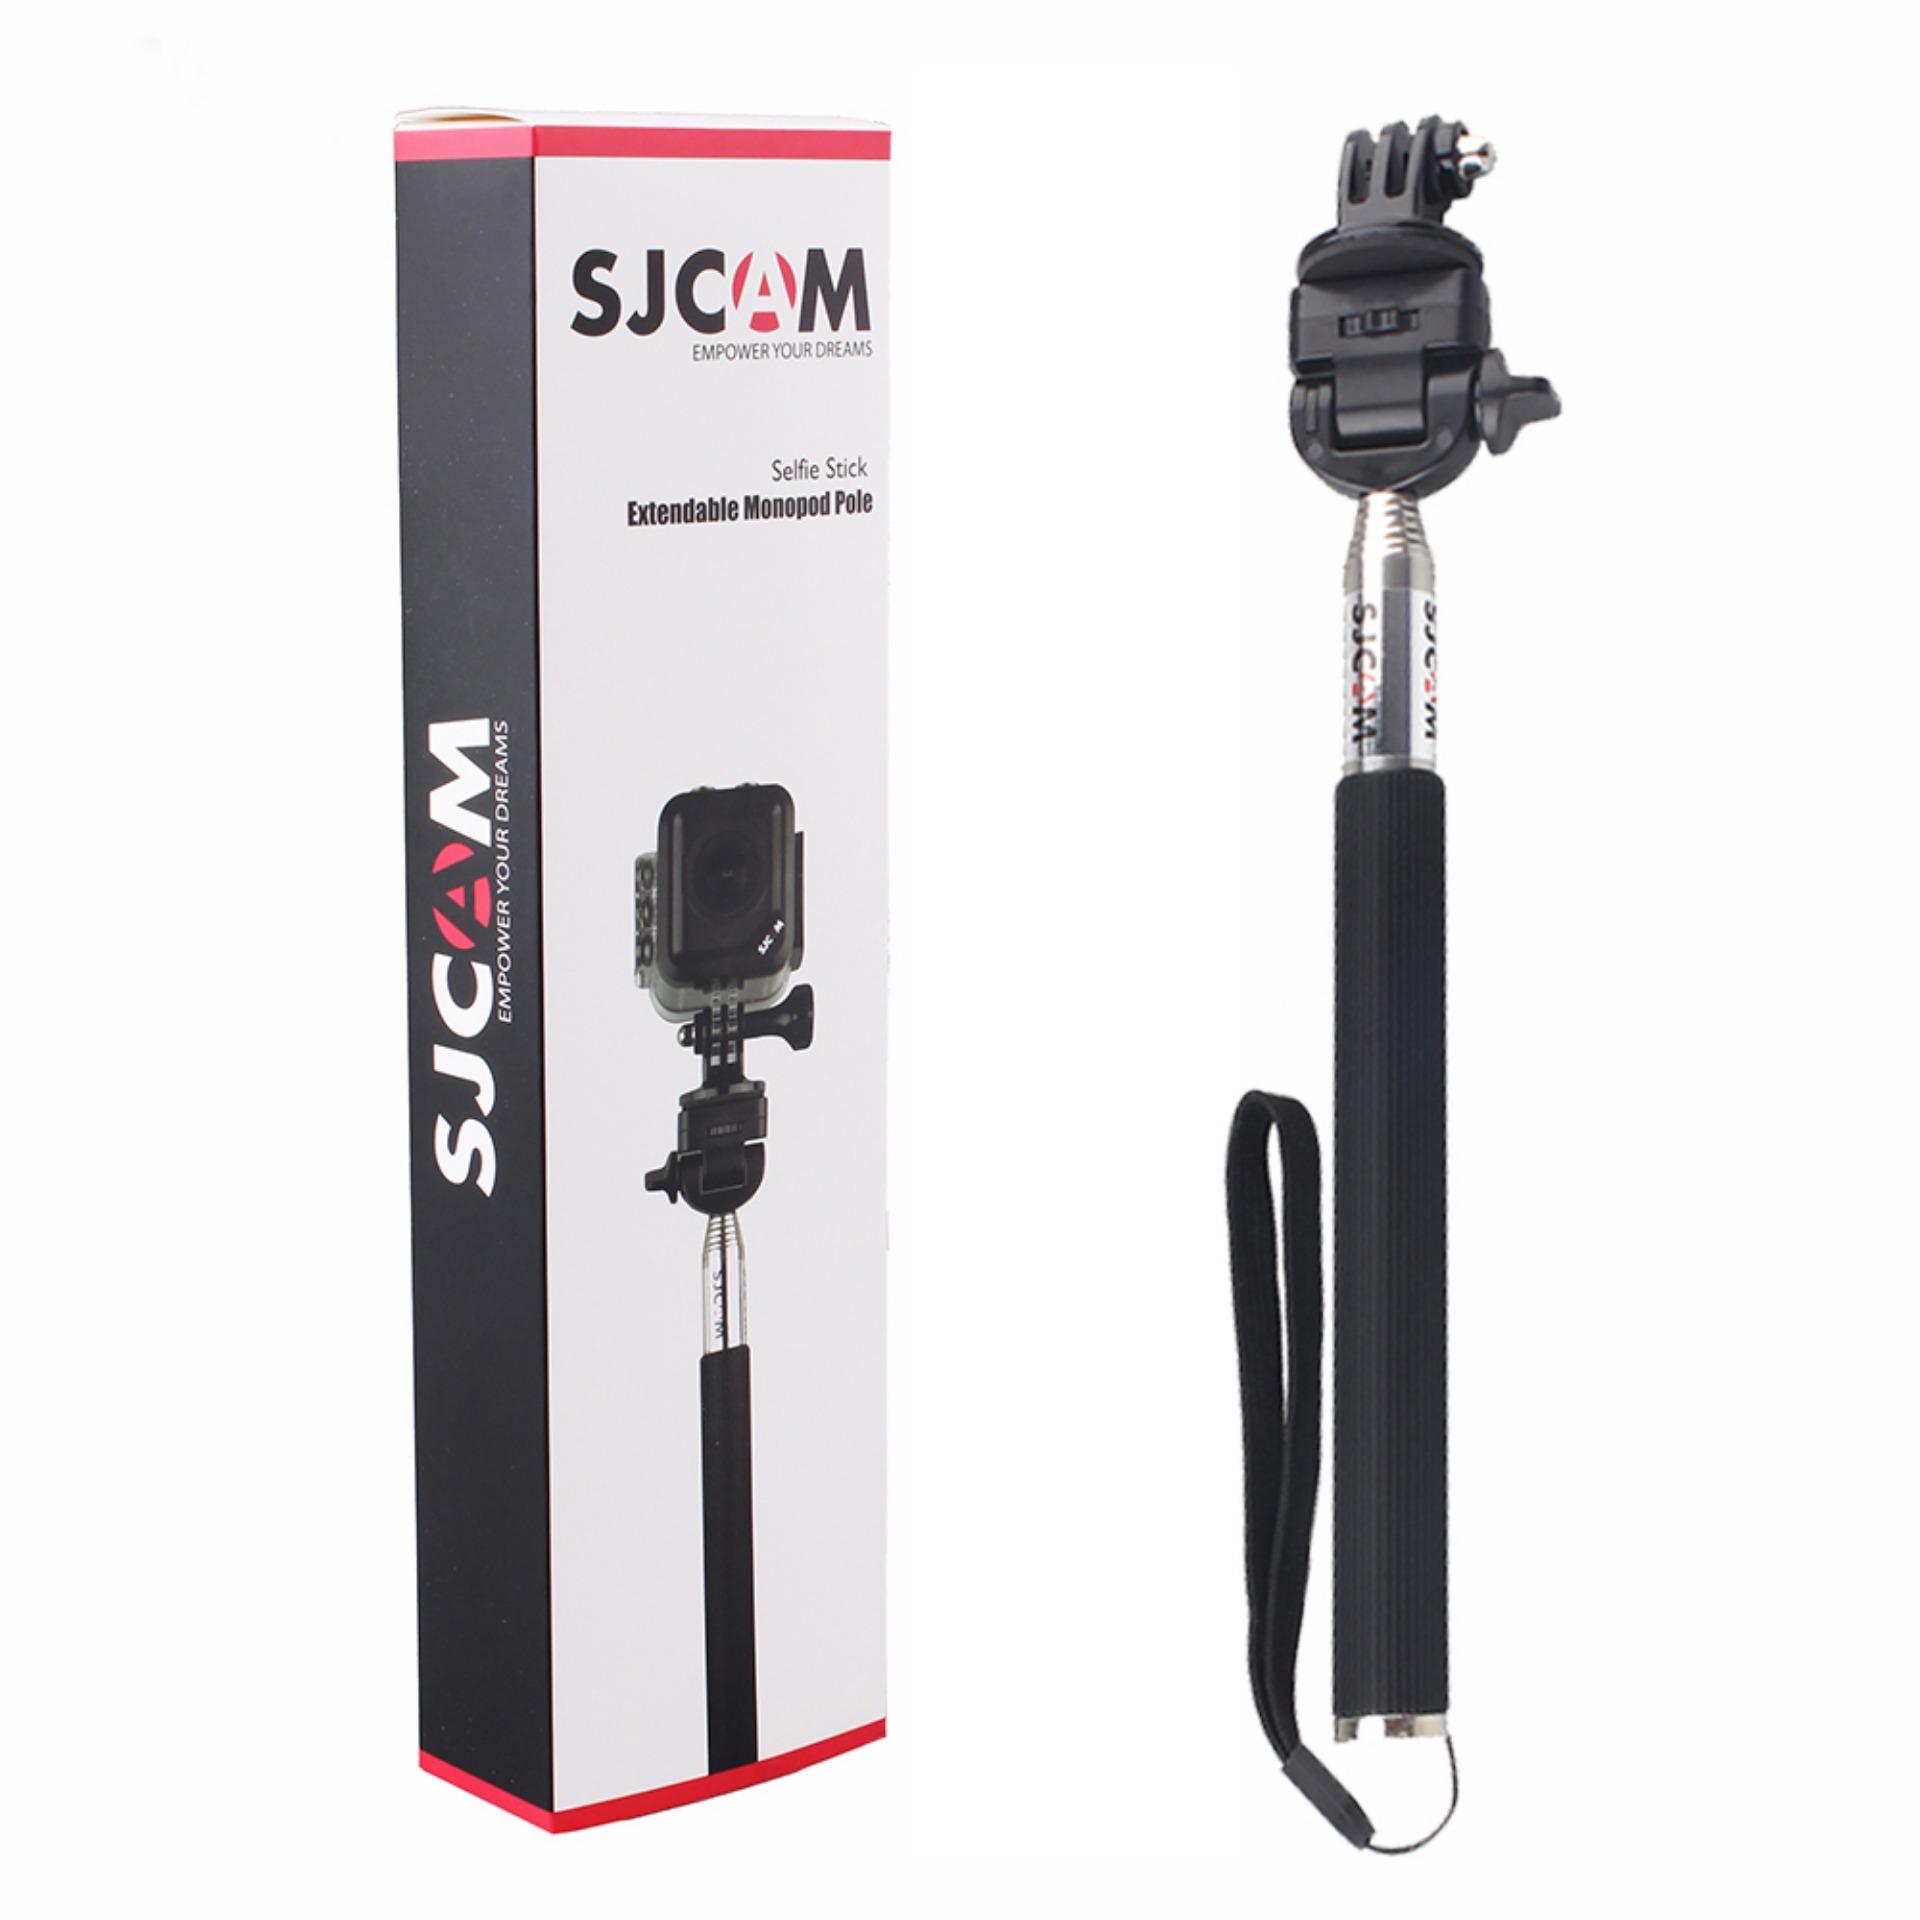 Sjcam Extendable Monopod Selfie Stick For Sjcam & Other Action Cameras (black/silver) By Sjcam. 